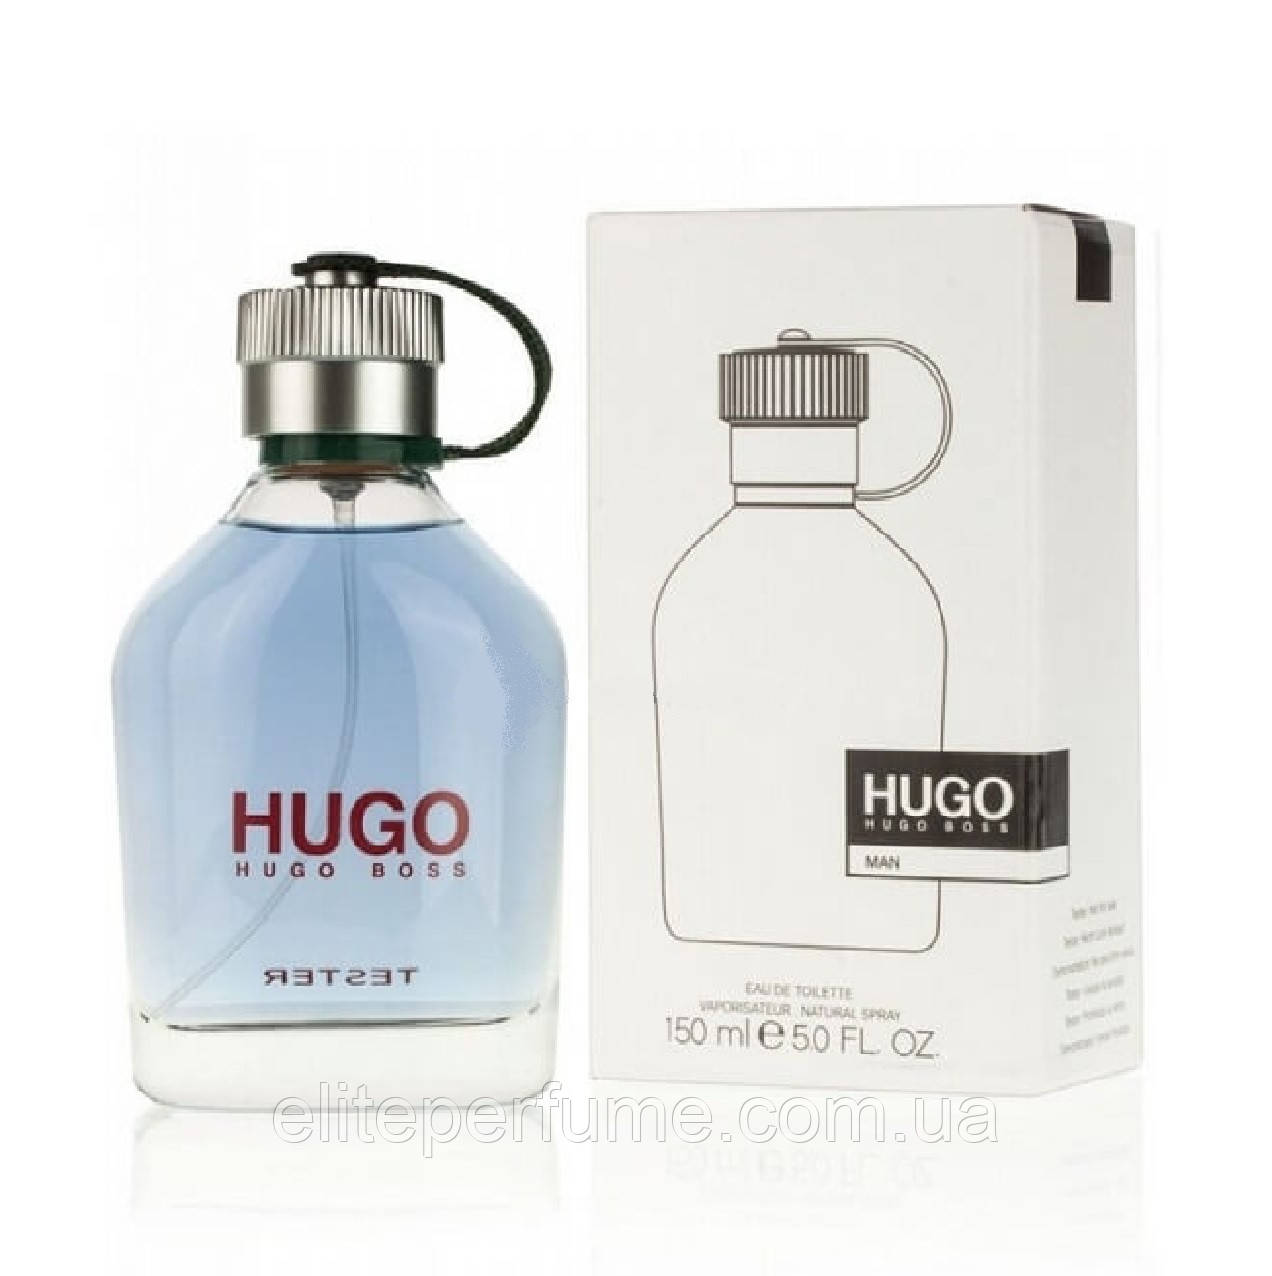 Ml hugo. Hugo Boss Hugo men 100 мл. Hugo Boss Hugo man 150 мл. Тестер мужской Hugo Boss Hugo man 150 ml. Hugo Boss Hugo 100мл.